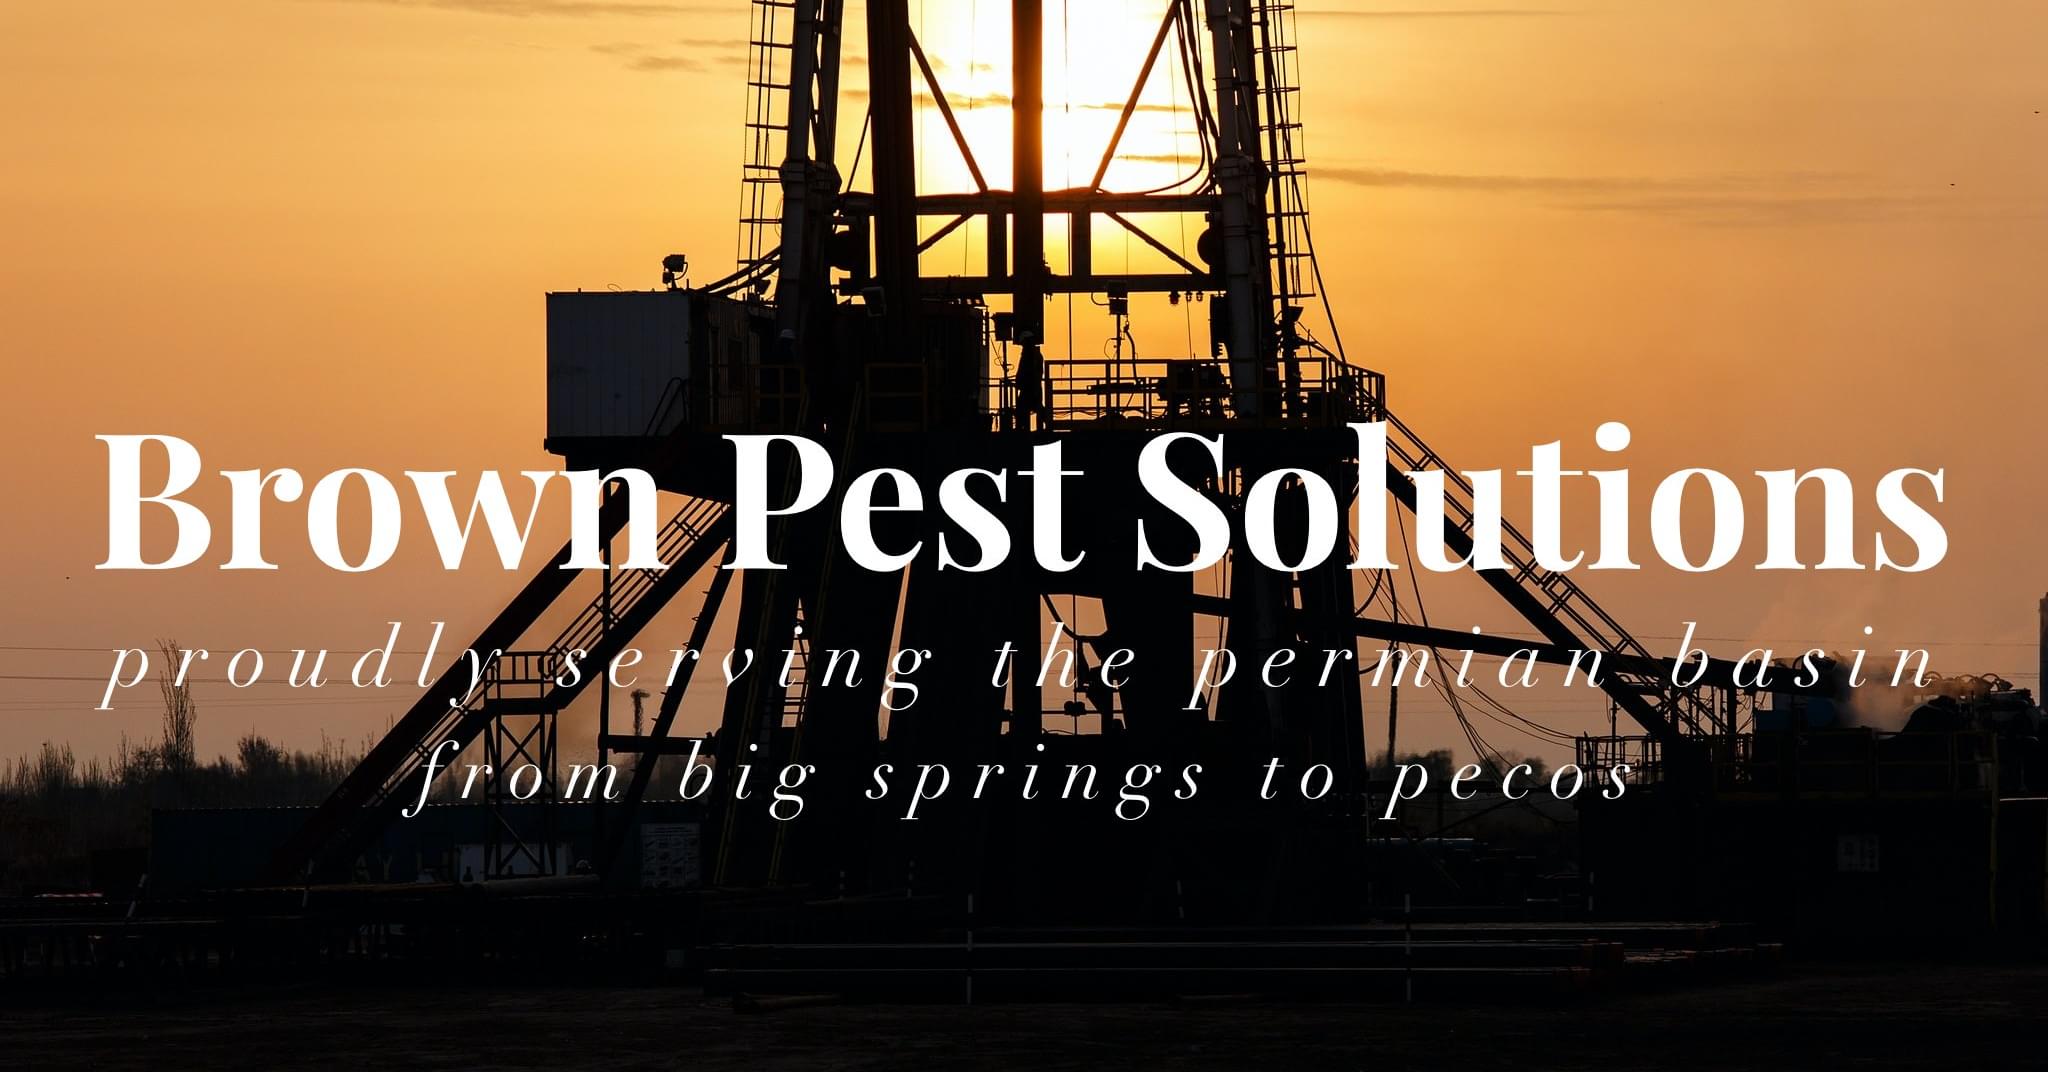 Brown Pest Solutions 305 NE 1st St, Andrews Texas 79714